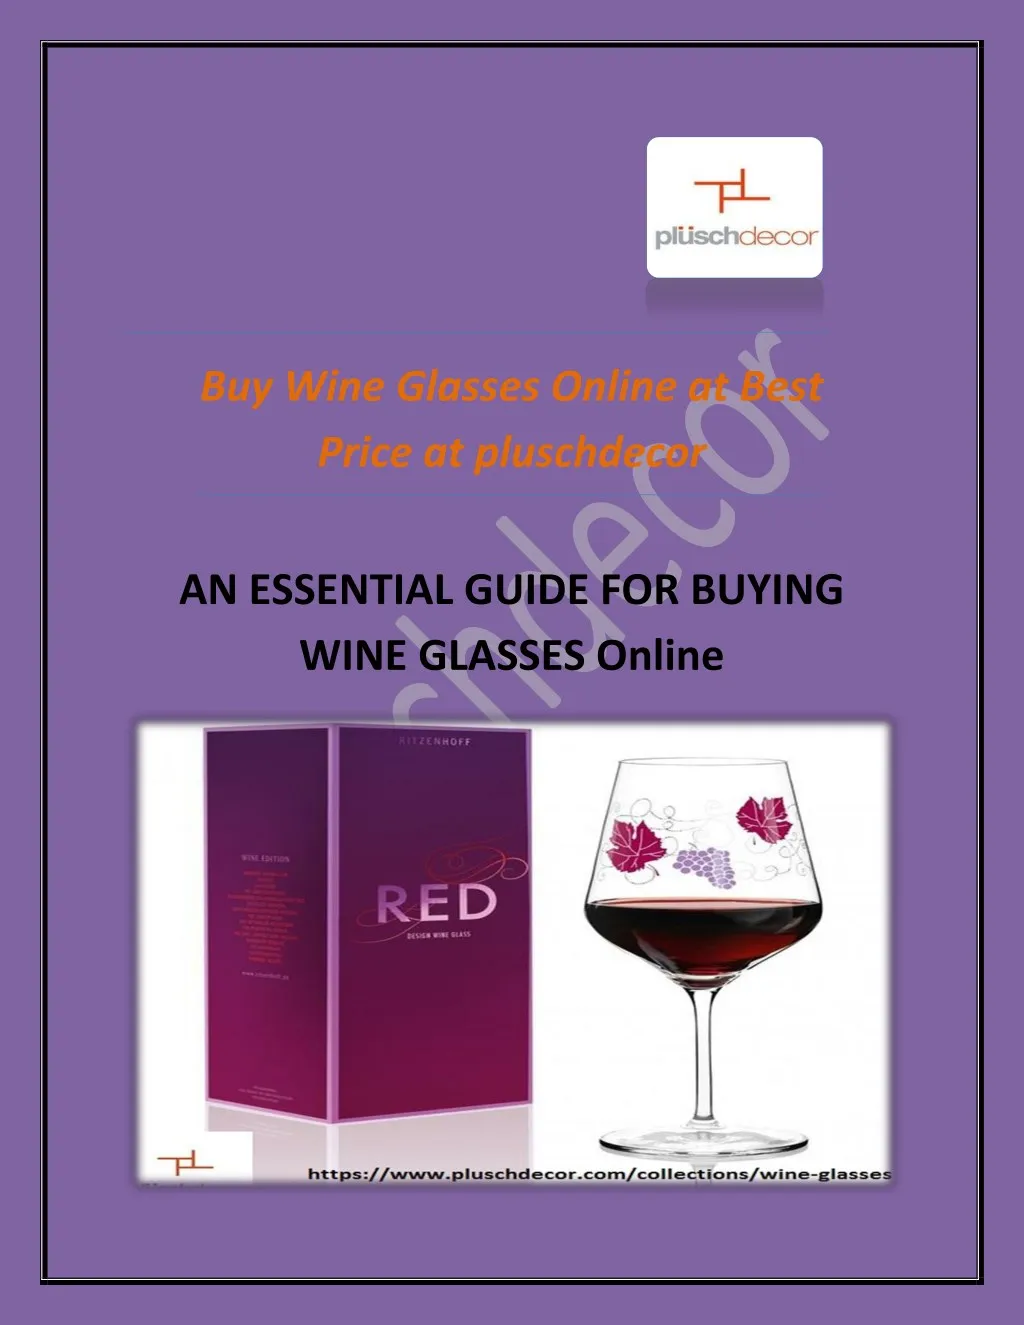 buy wine glasses online at best price